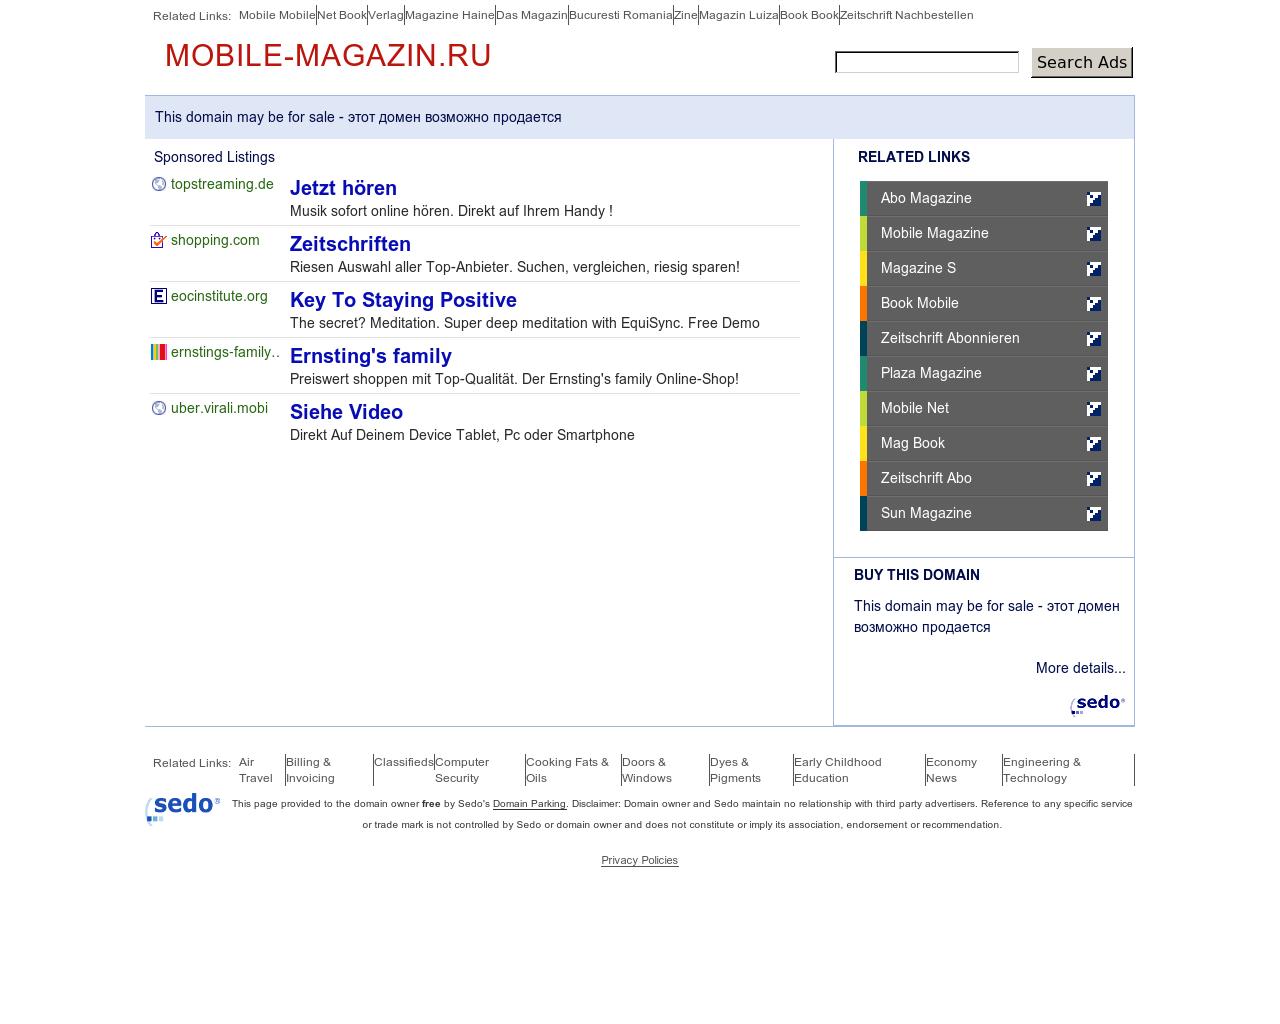 Изображение сайта mobile-magazin.ru в разрешении 1280x1024